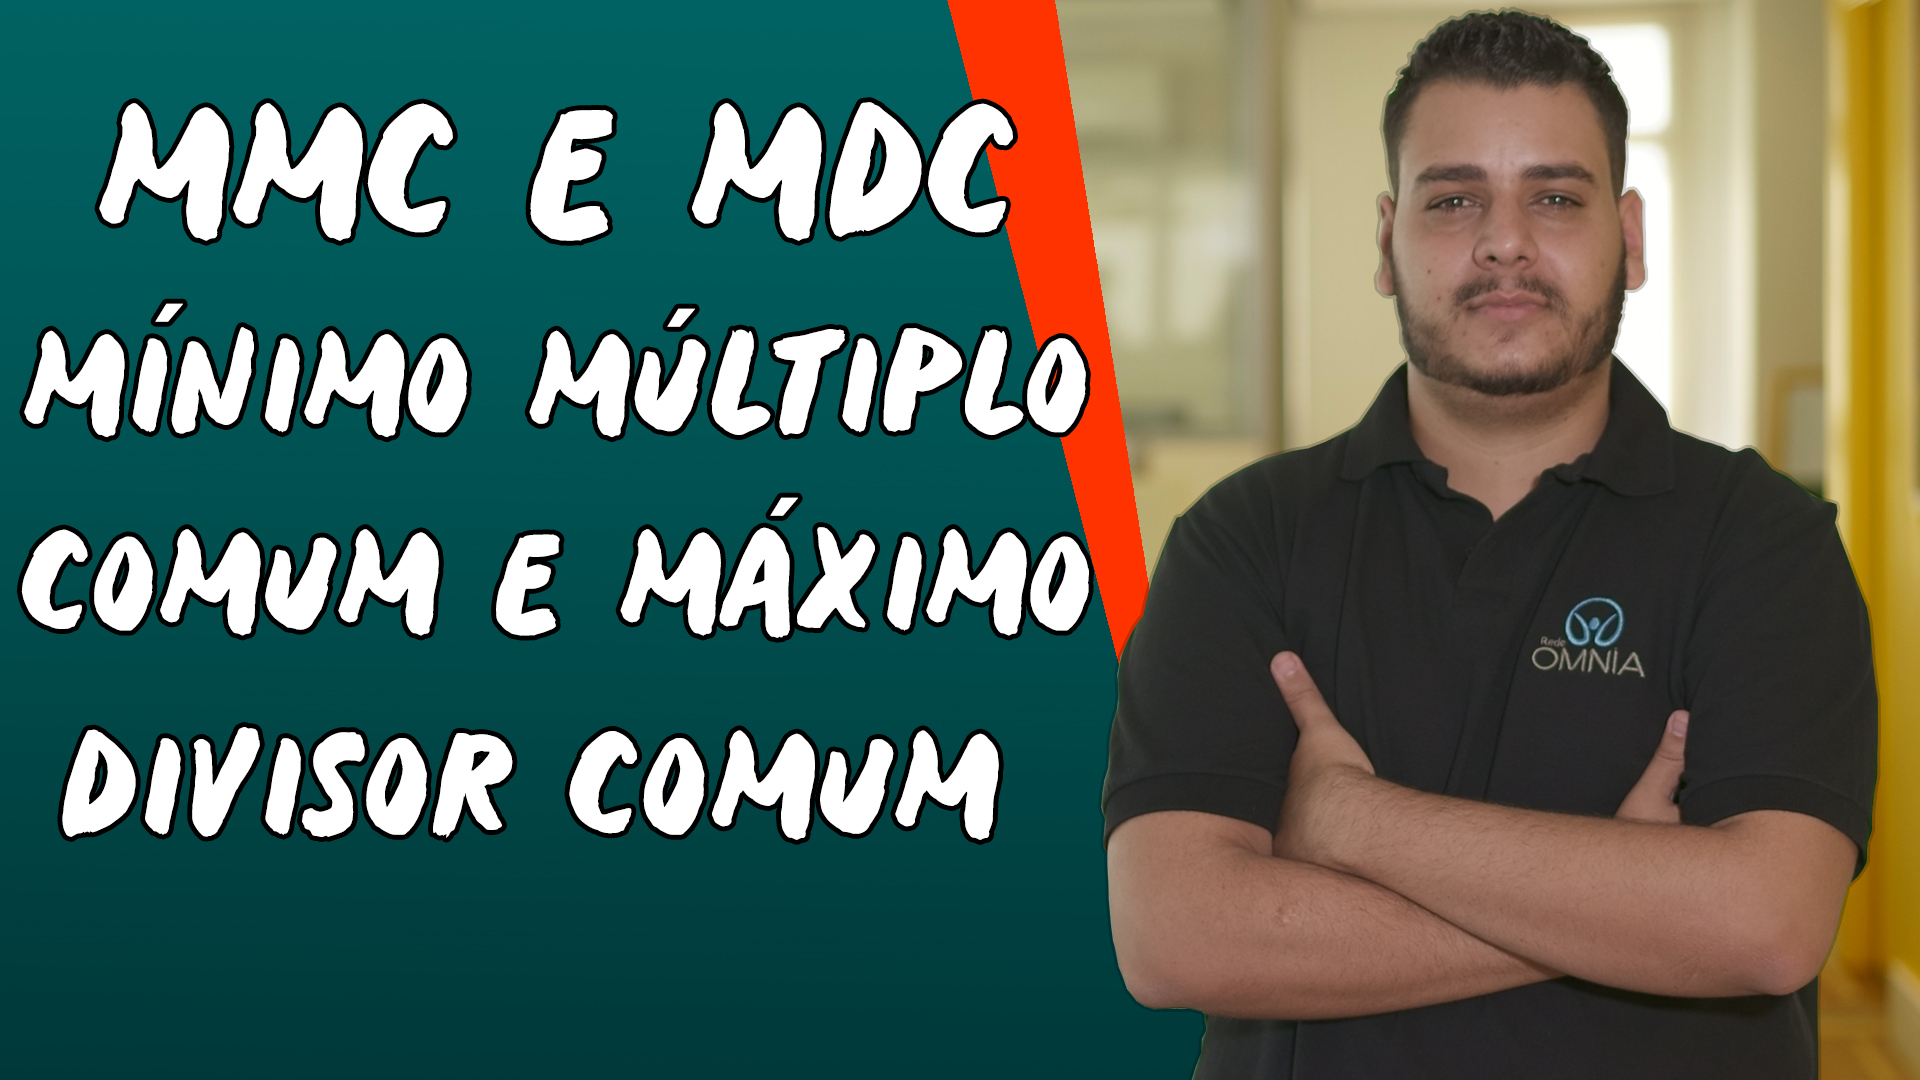 "MMC e MDC: Mínimo Múltiplo Comum e Máximo Divisor Comum" escrito sobre fundo verde